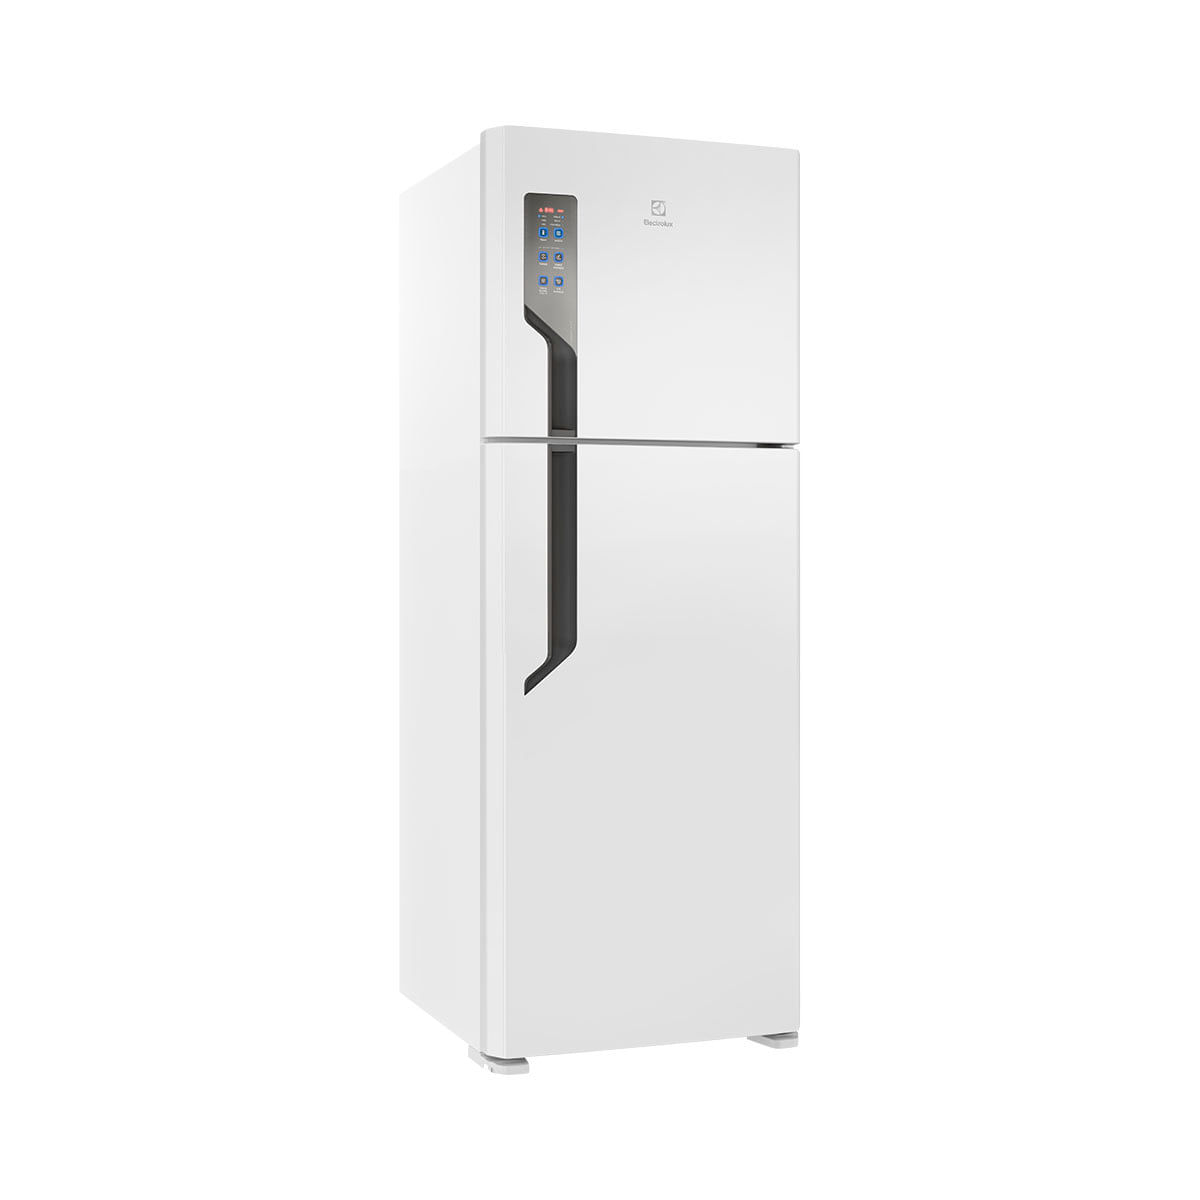 Geladeira Electrolux Frost Free Top Freezer 2 Portas TF56 474 Litros Branca 110V